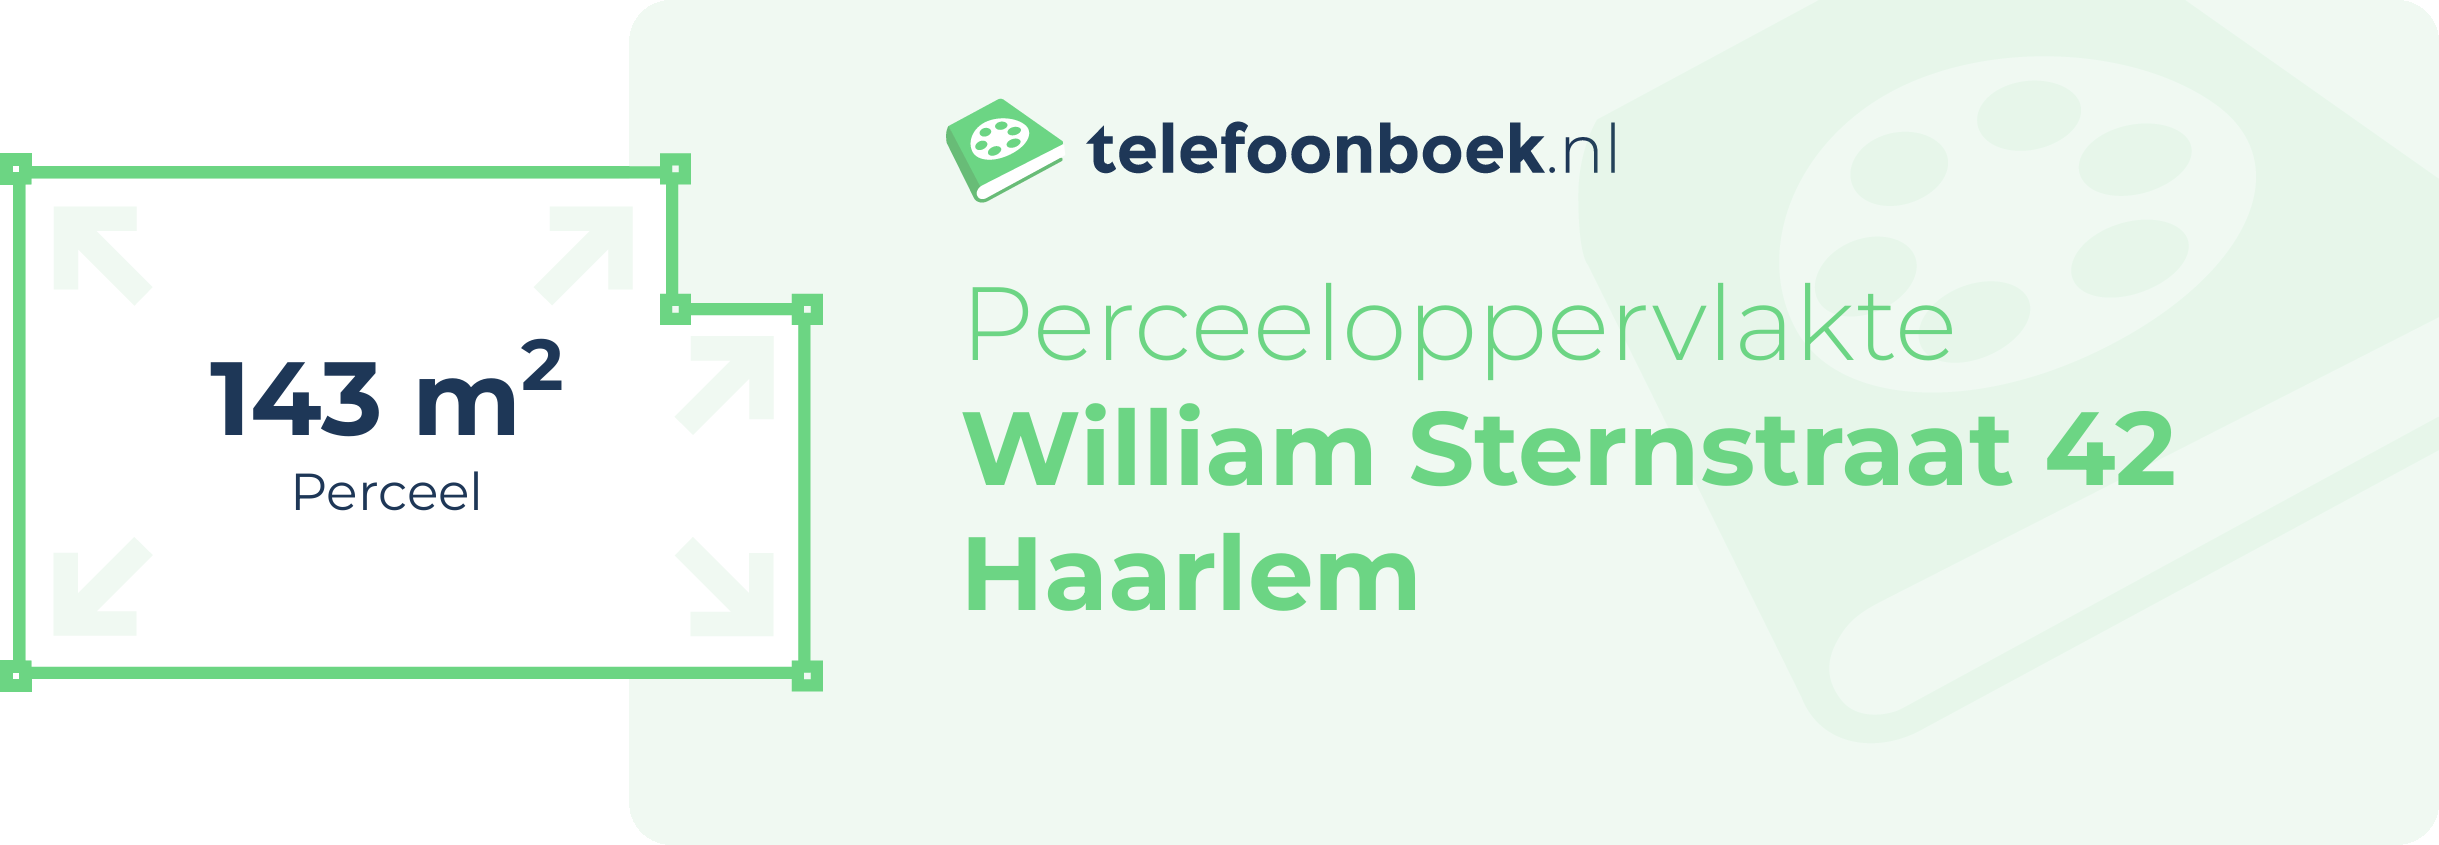 Perceeloppervlakte William Sternstraat 42 Haarlem